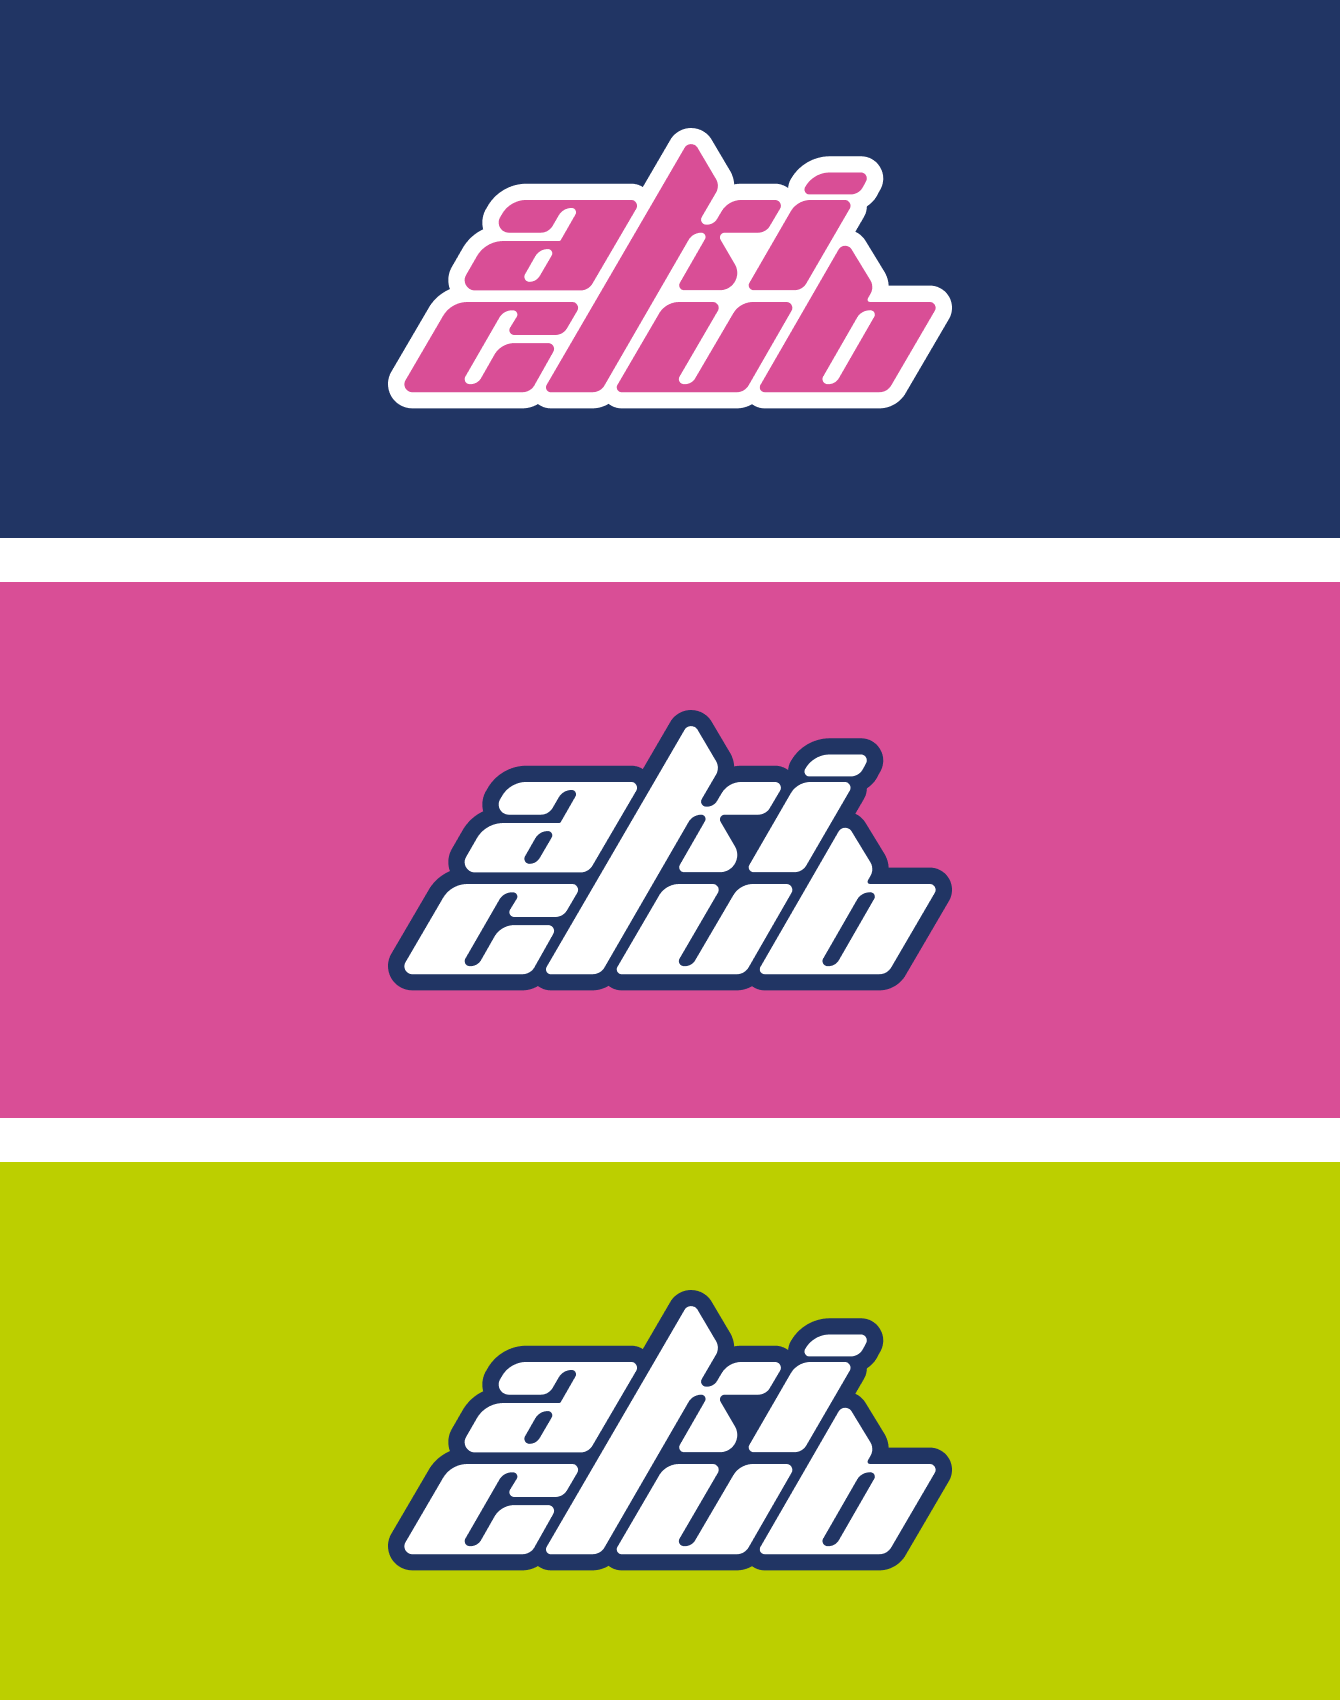 Akiclub logo variants